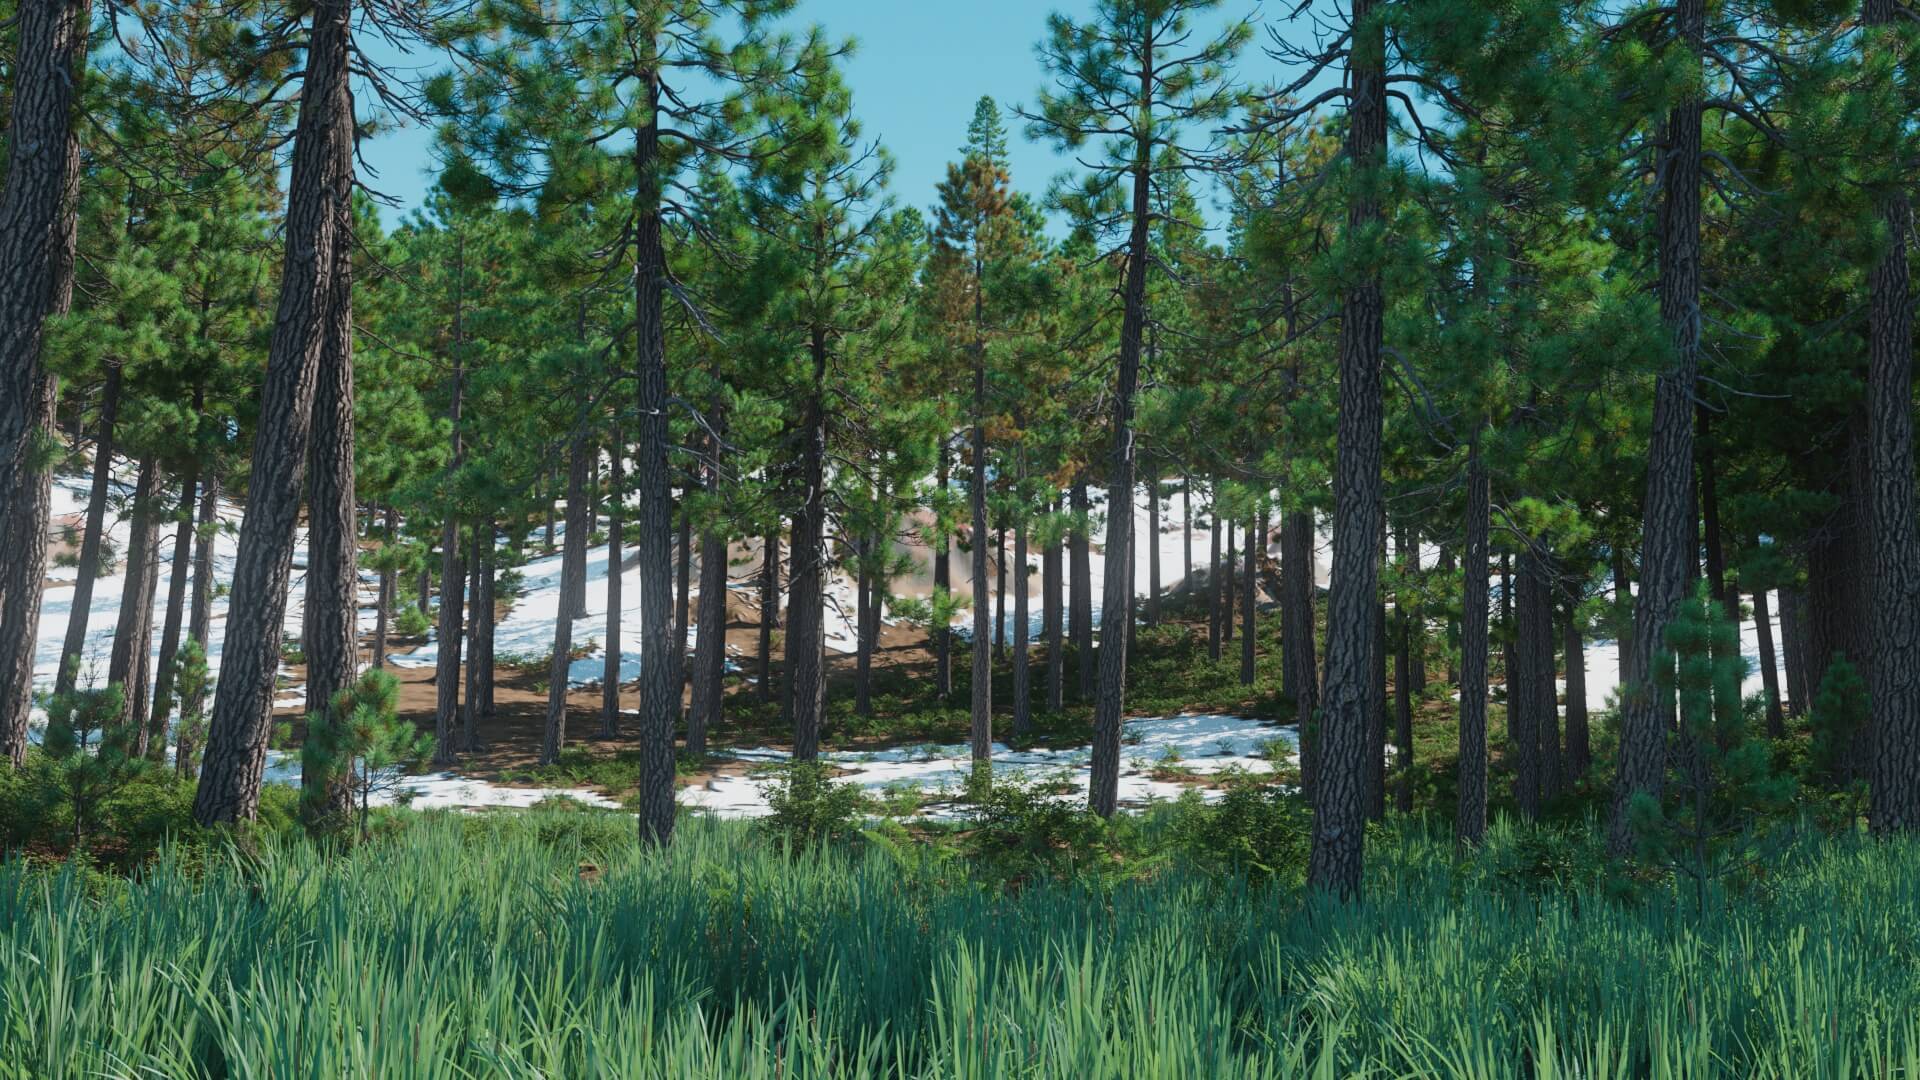 3D model of the Jeffrey pine lone Pinus jeffreyi lone